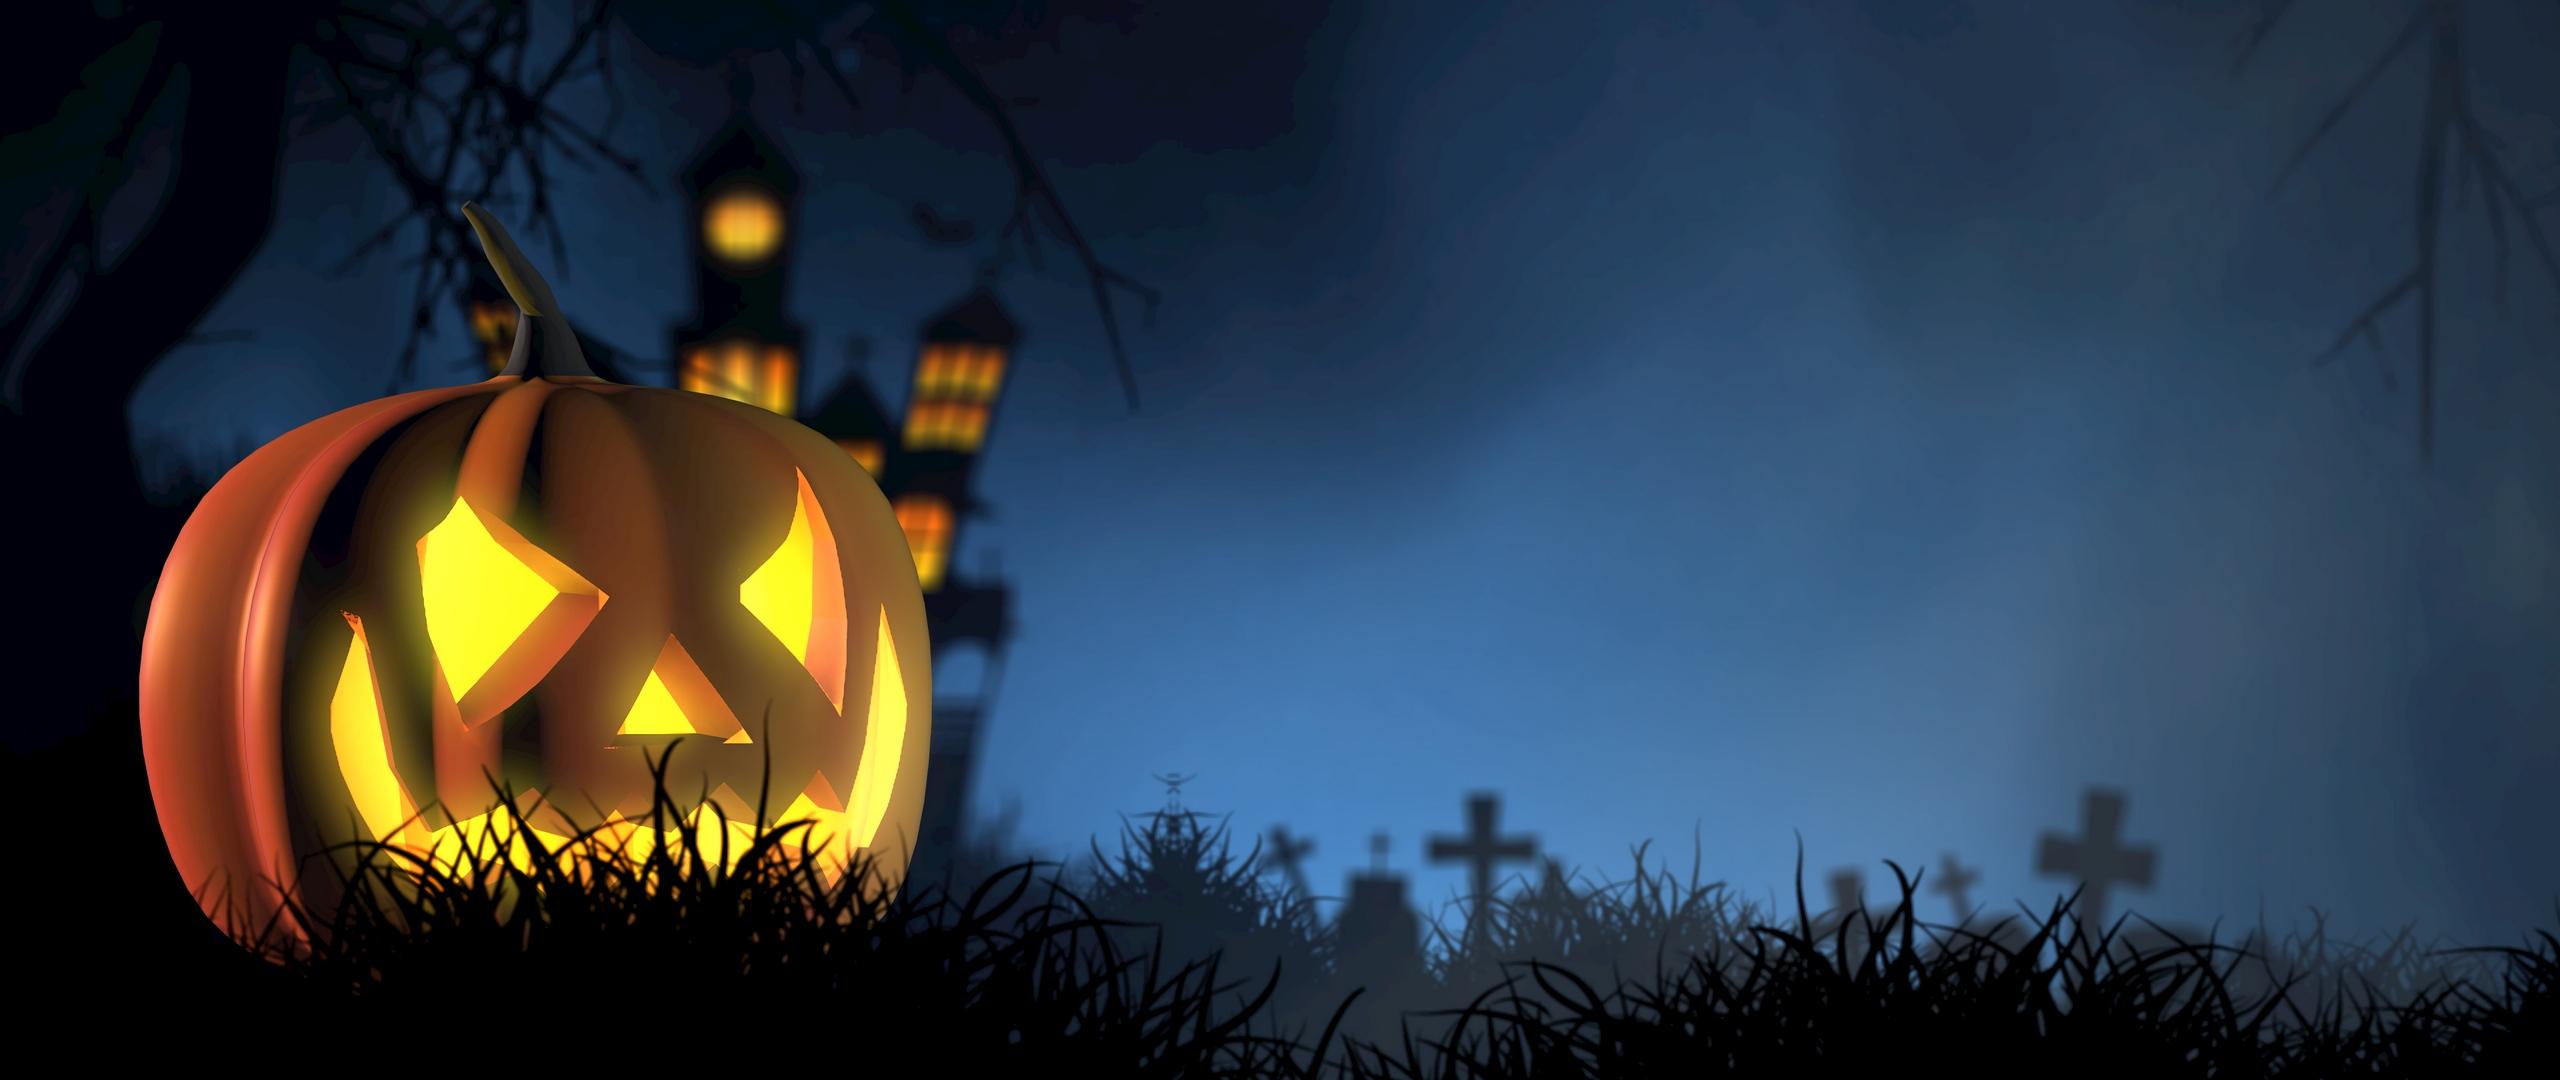 Download wallpaper 2560x1080 halloween, pumpkin, spooky, face, autumn dual wide 1080p HD background